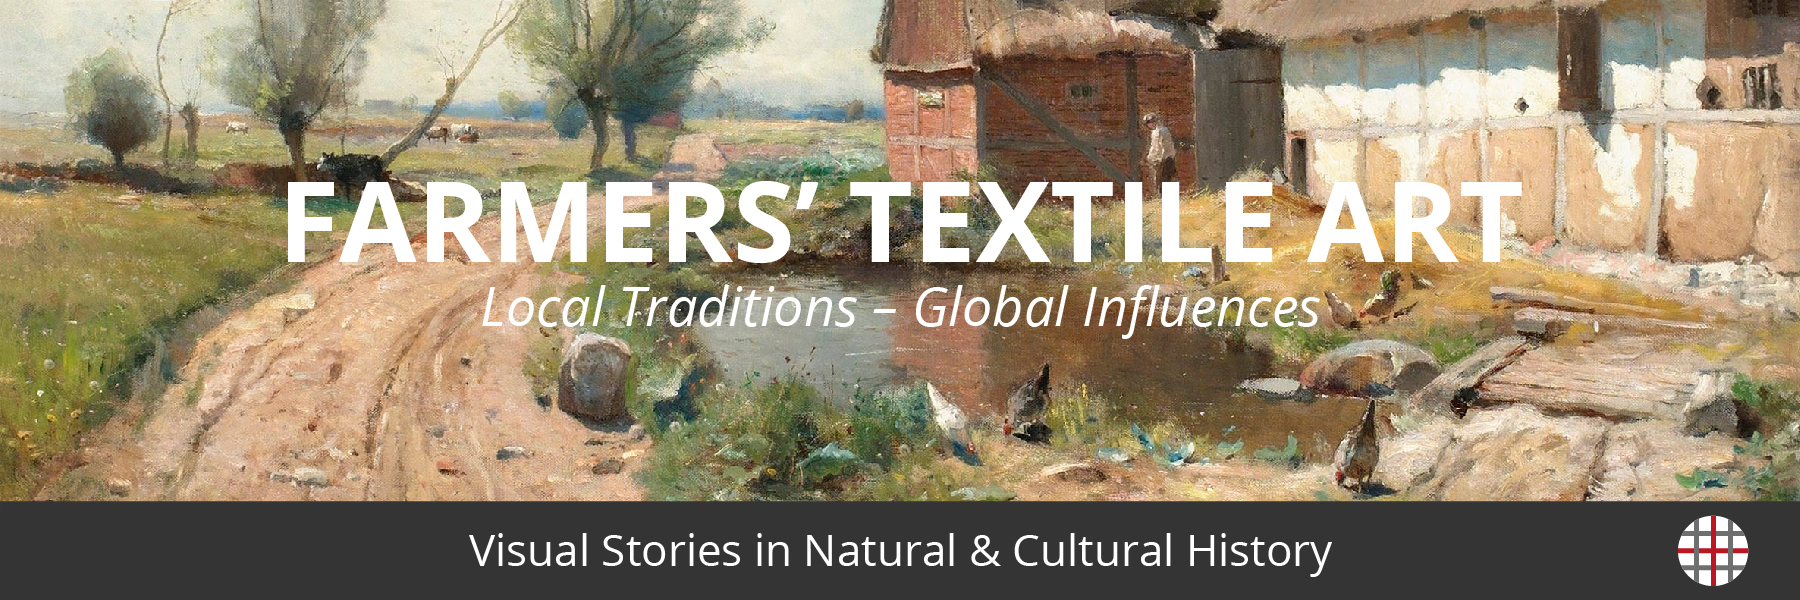 Farmers Textile Art